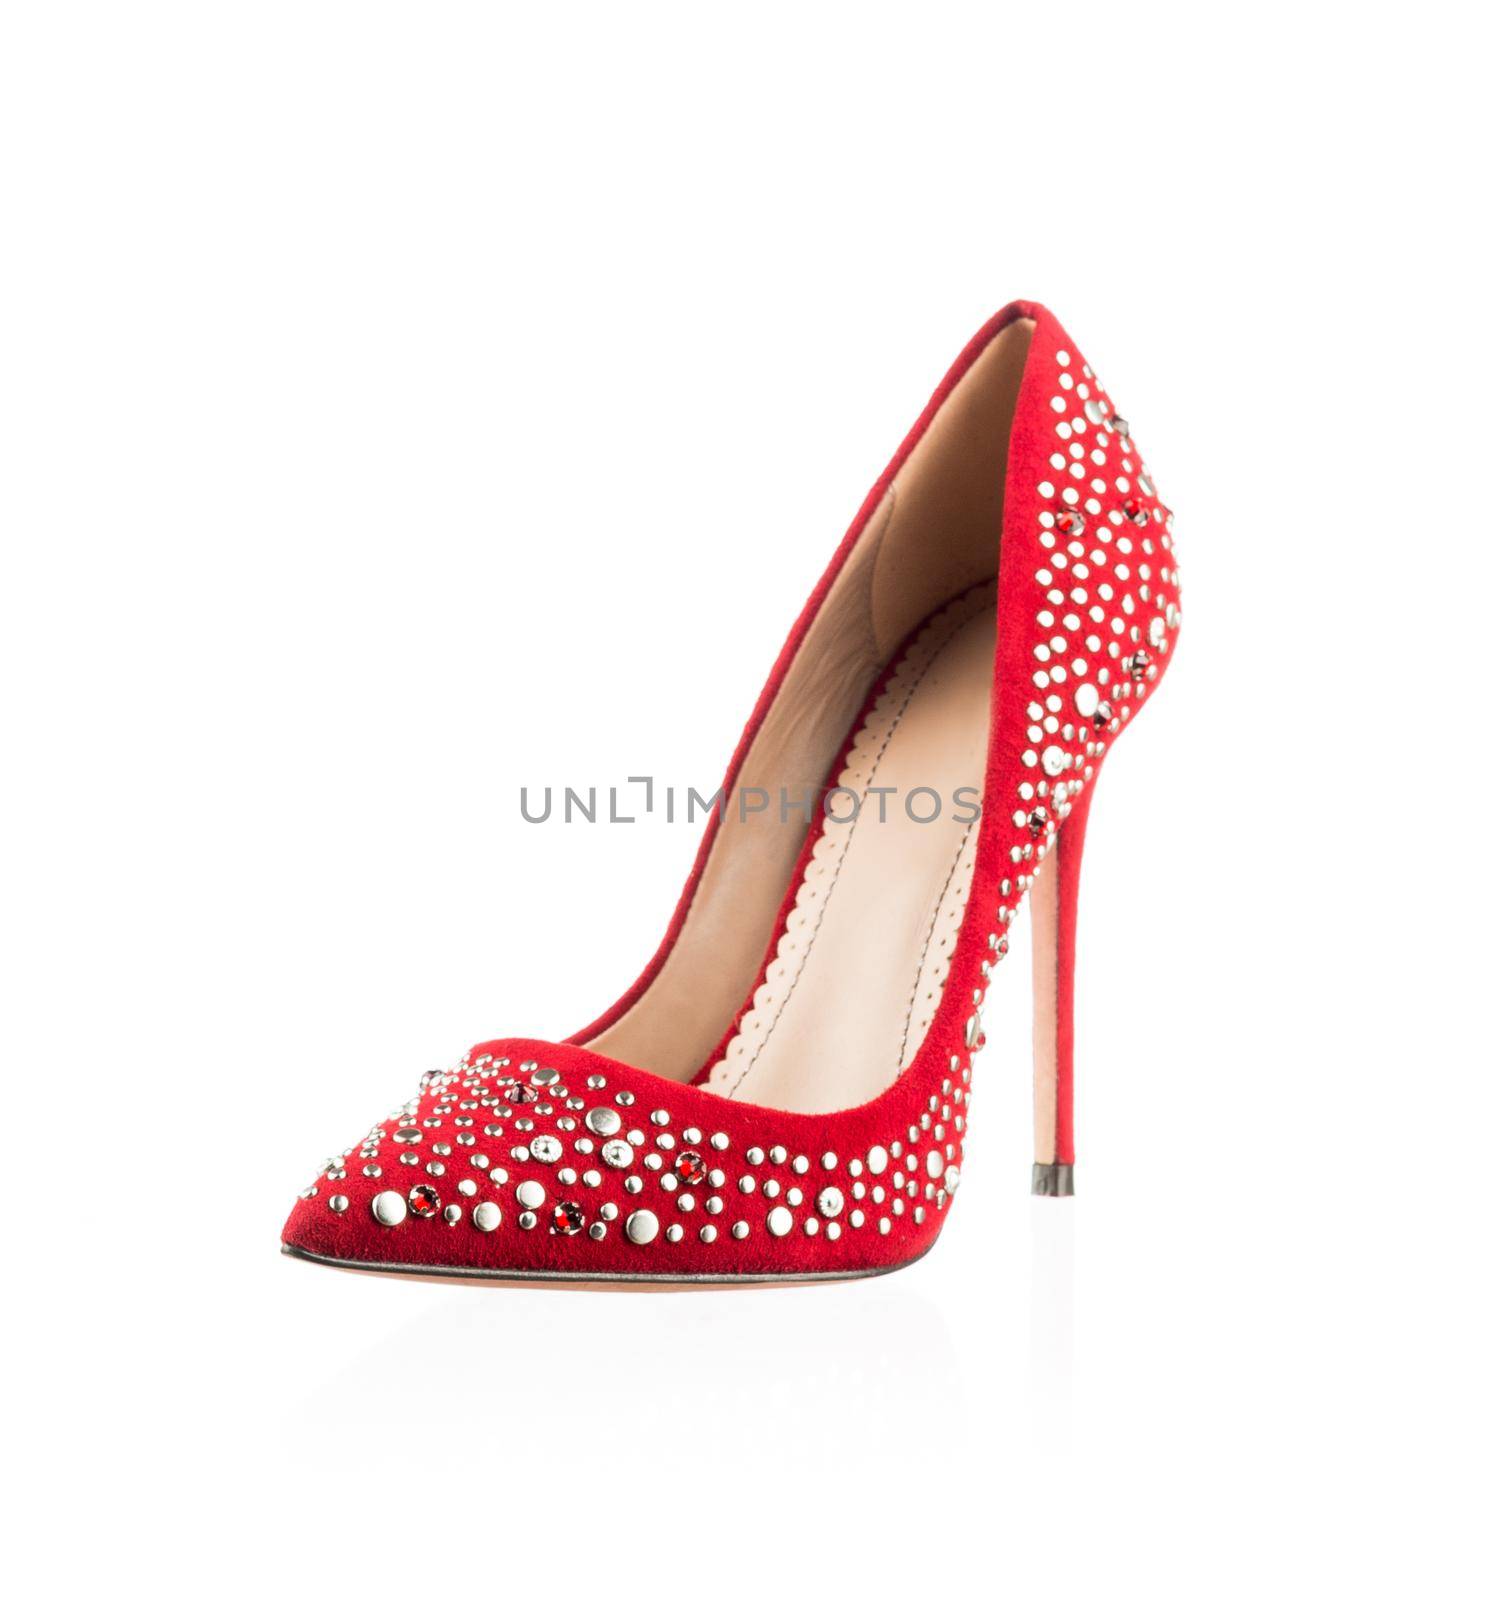 Fashionable red women shoe by nikitabuida